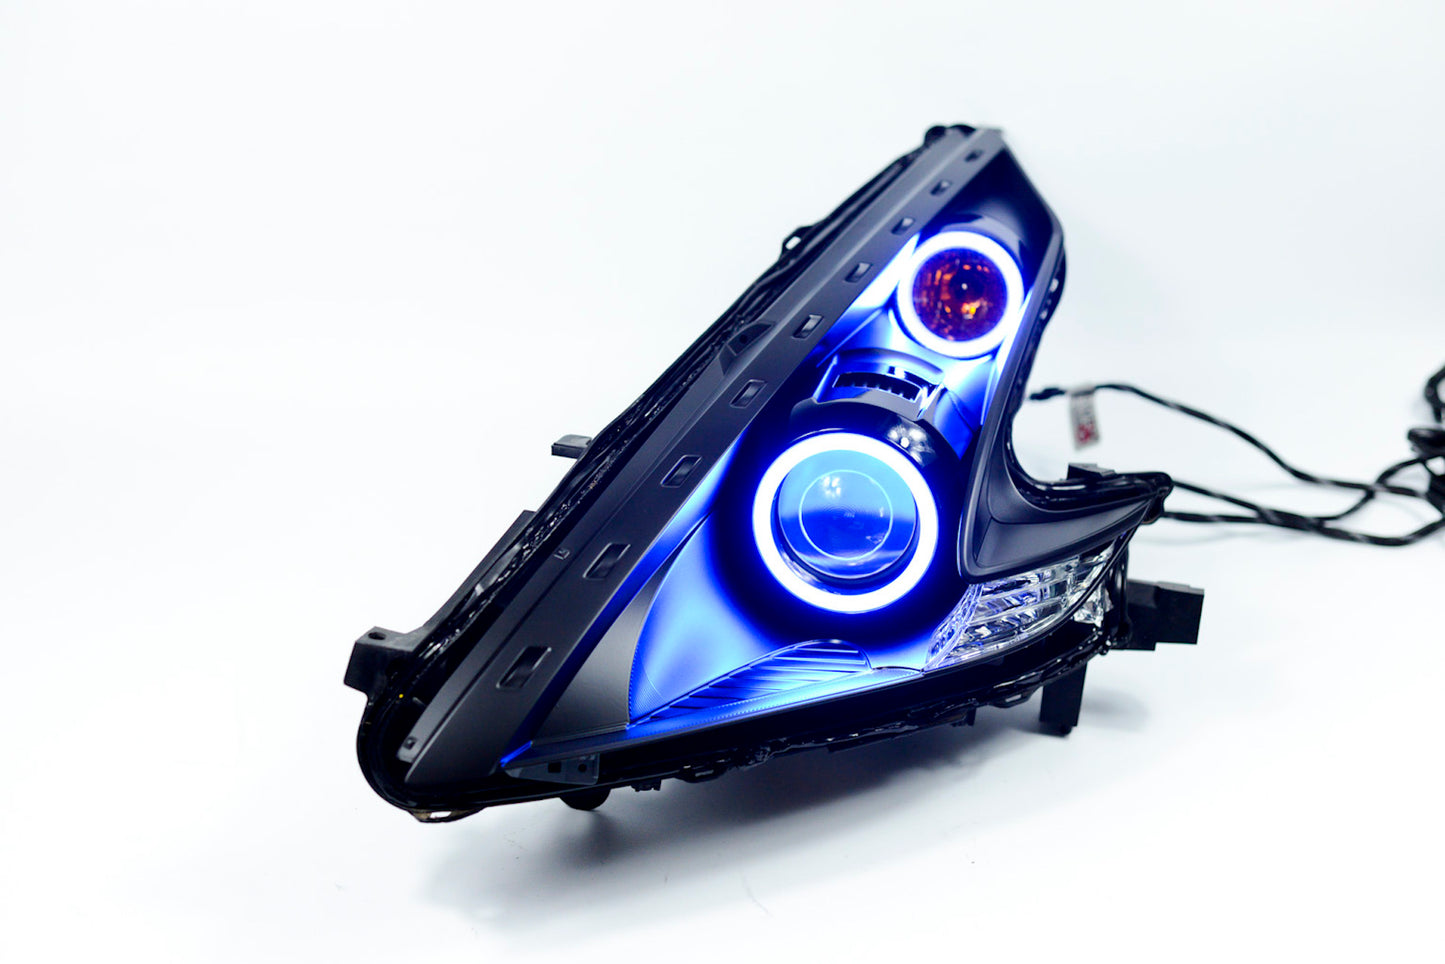 138mm SC: Profile Prism Halo w/ Driver (RGB)